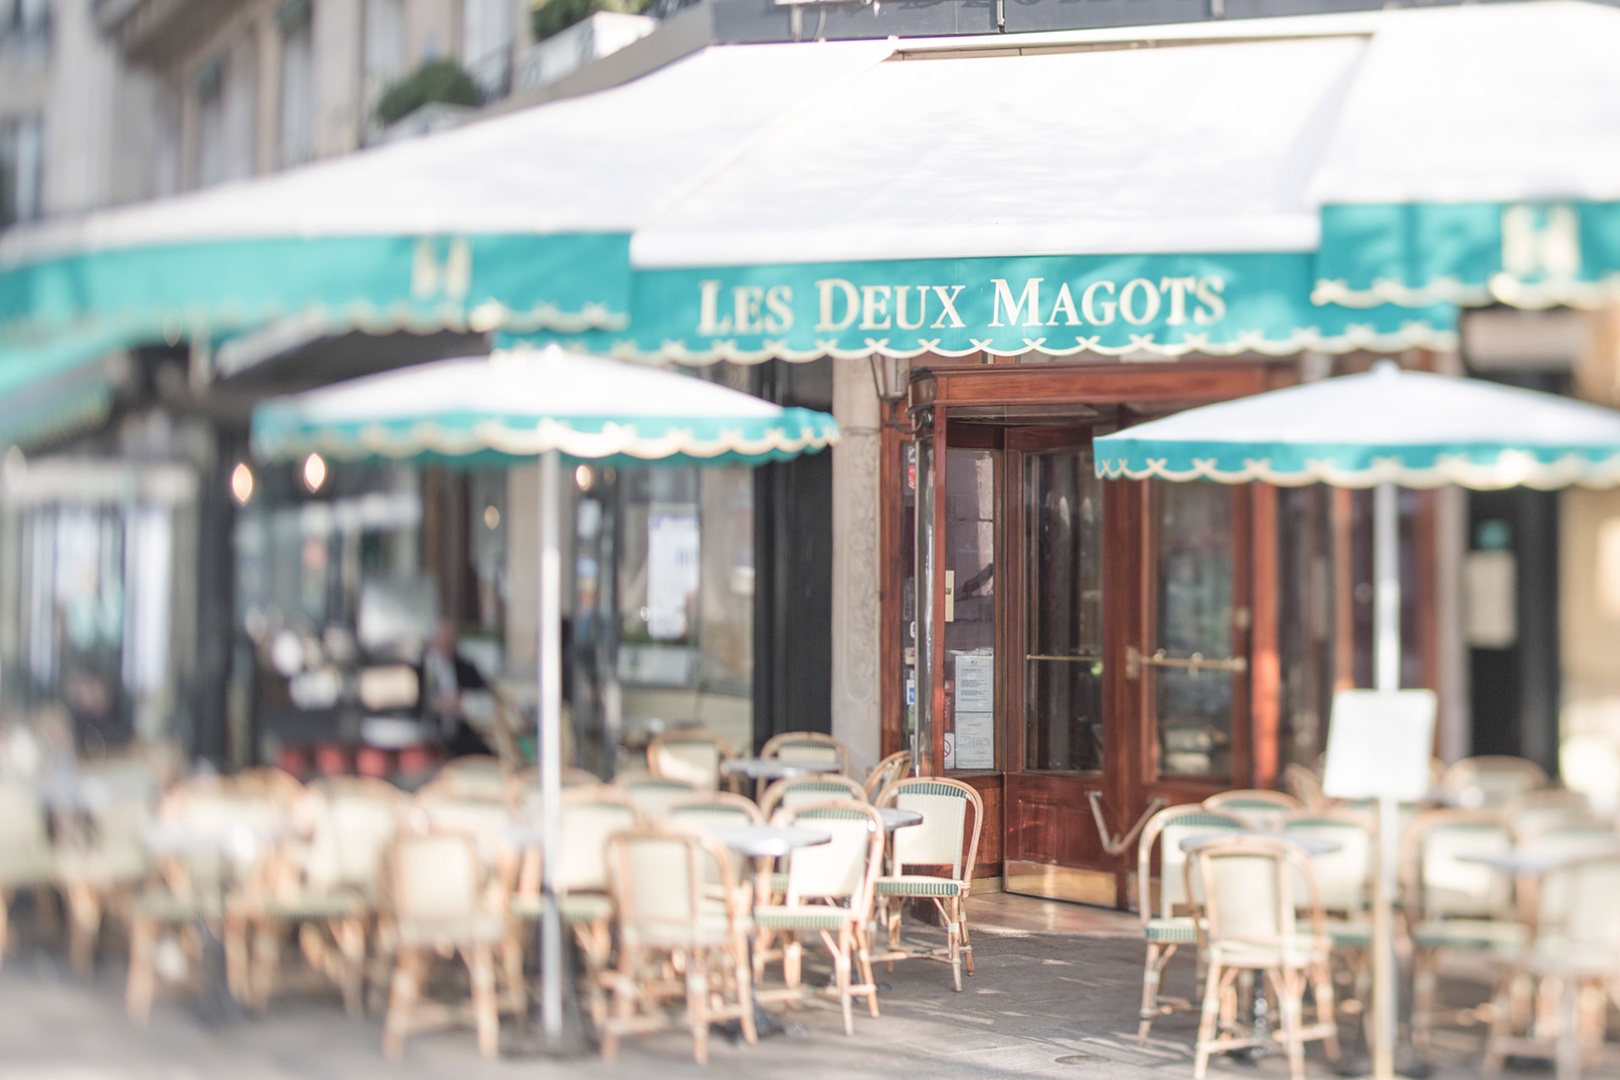 Have a coffee at the famous Les Deux Magots cafe